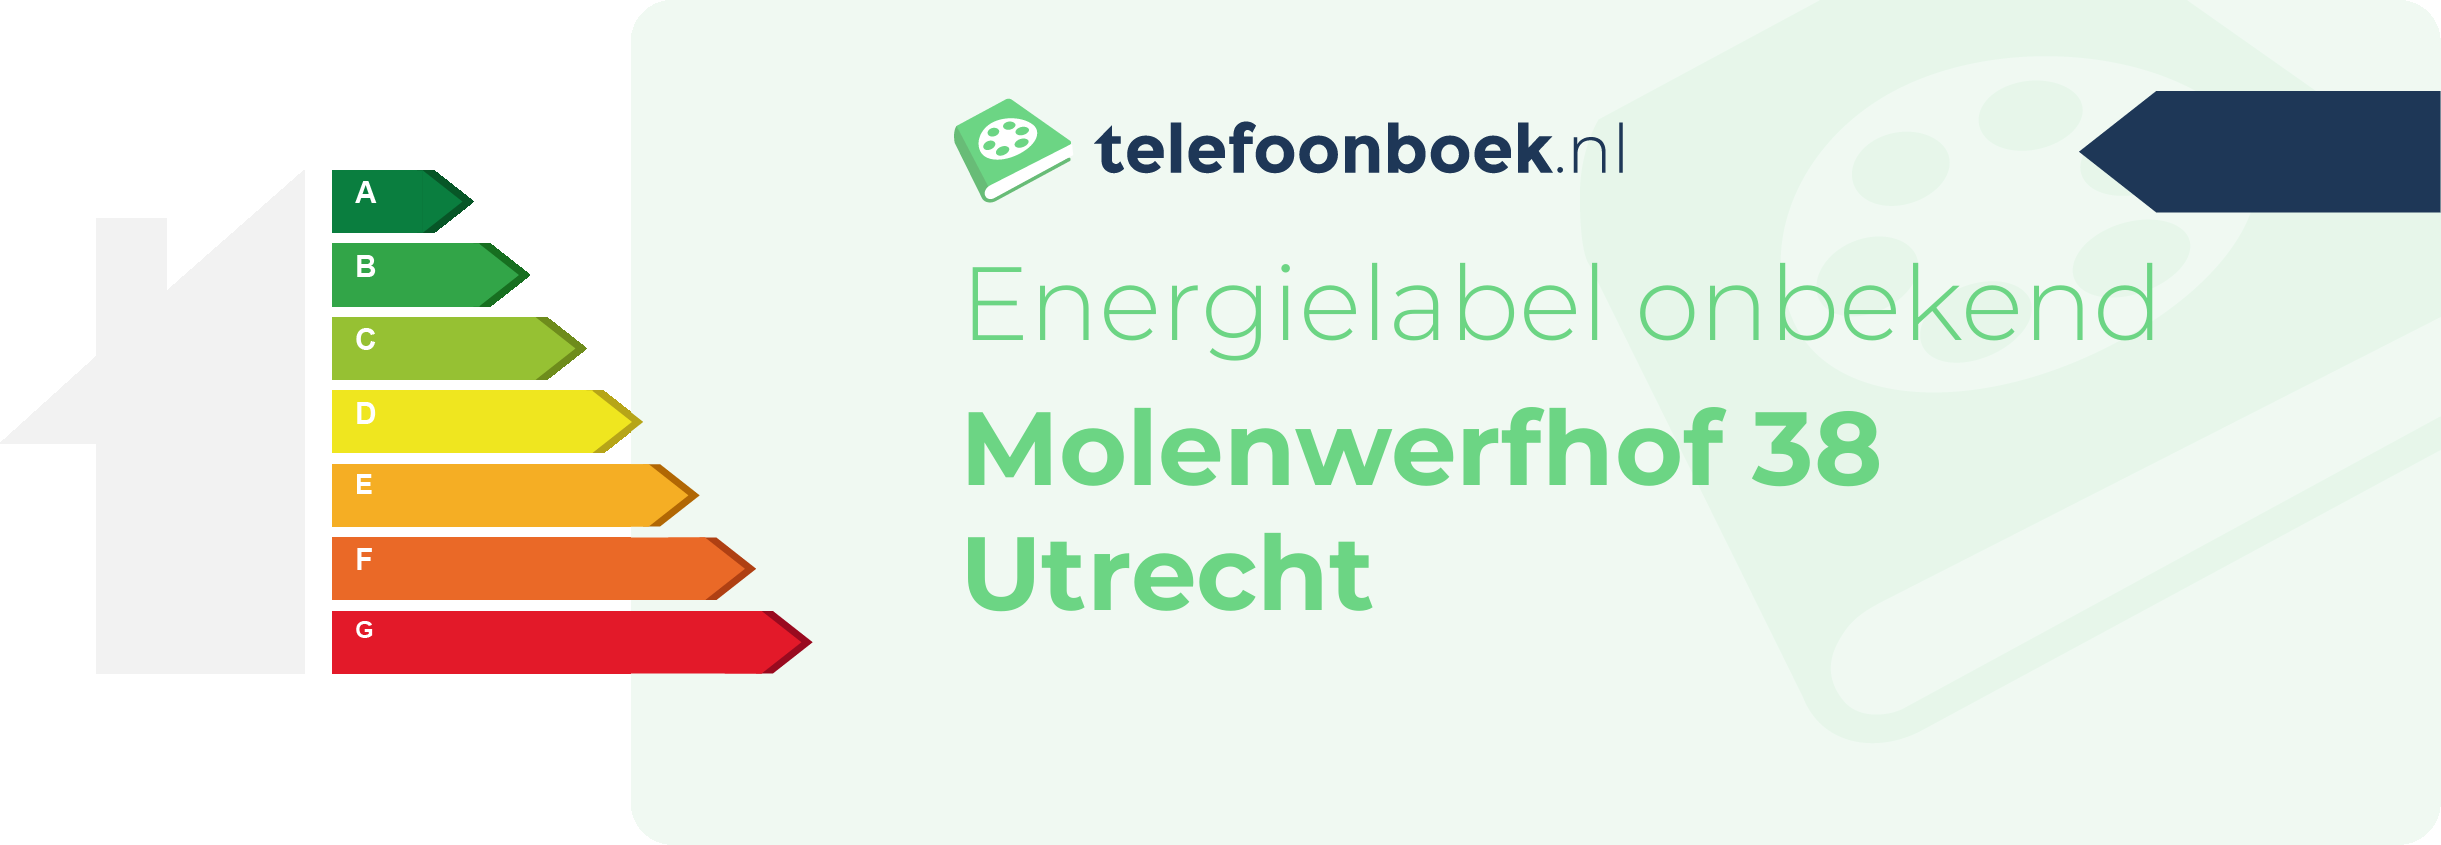 Energielabel Molenwerfhof 38 Utrecht